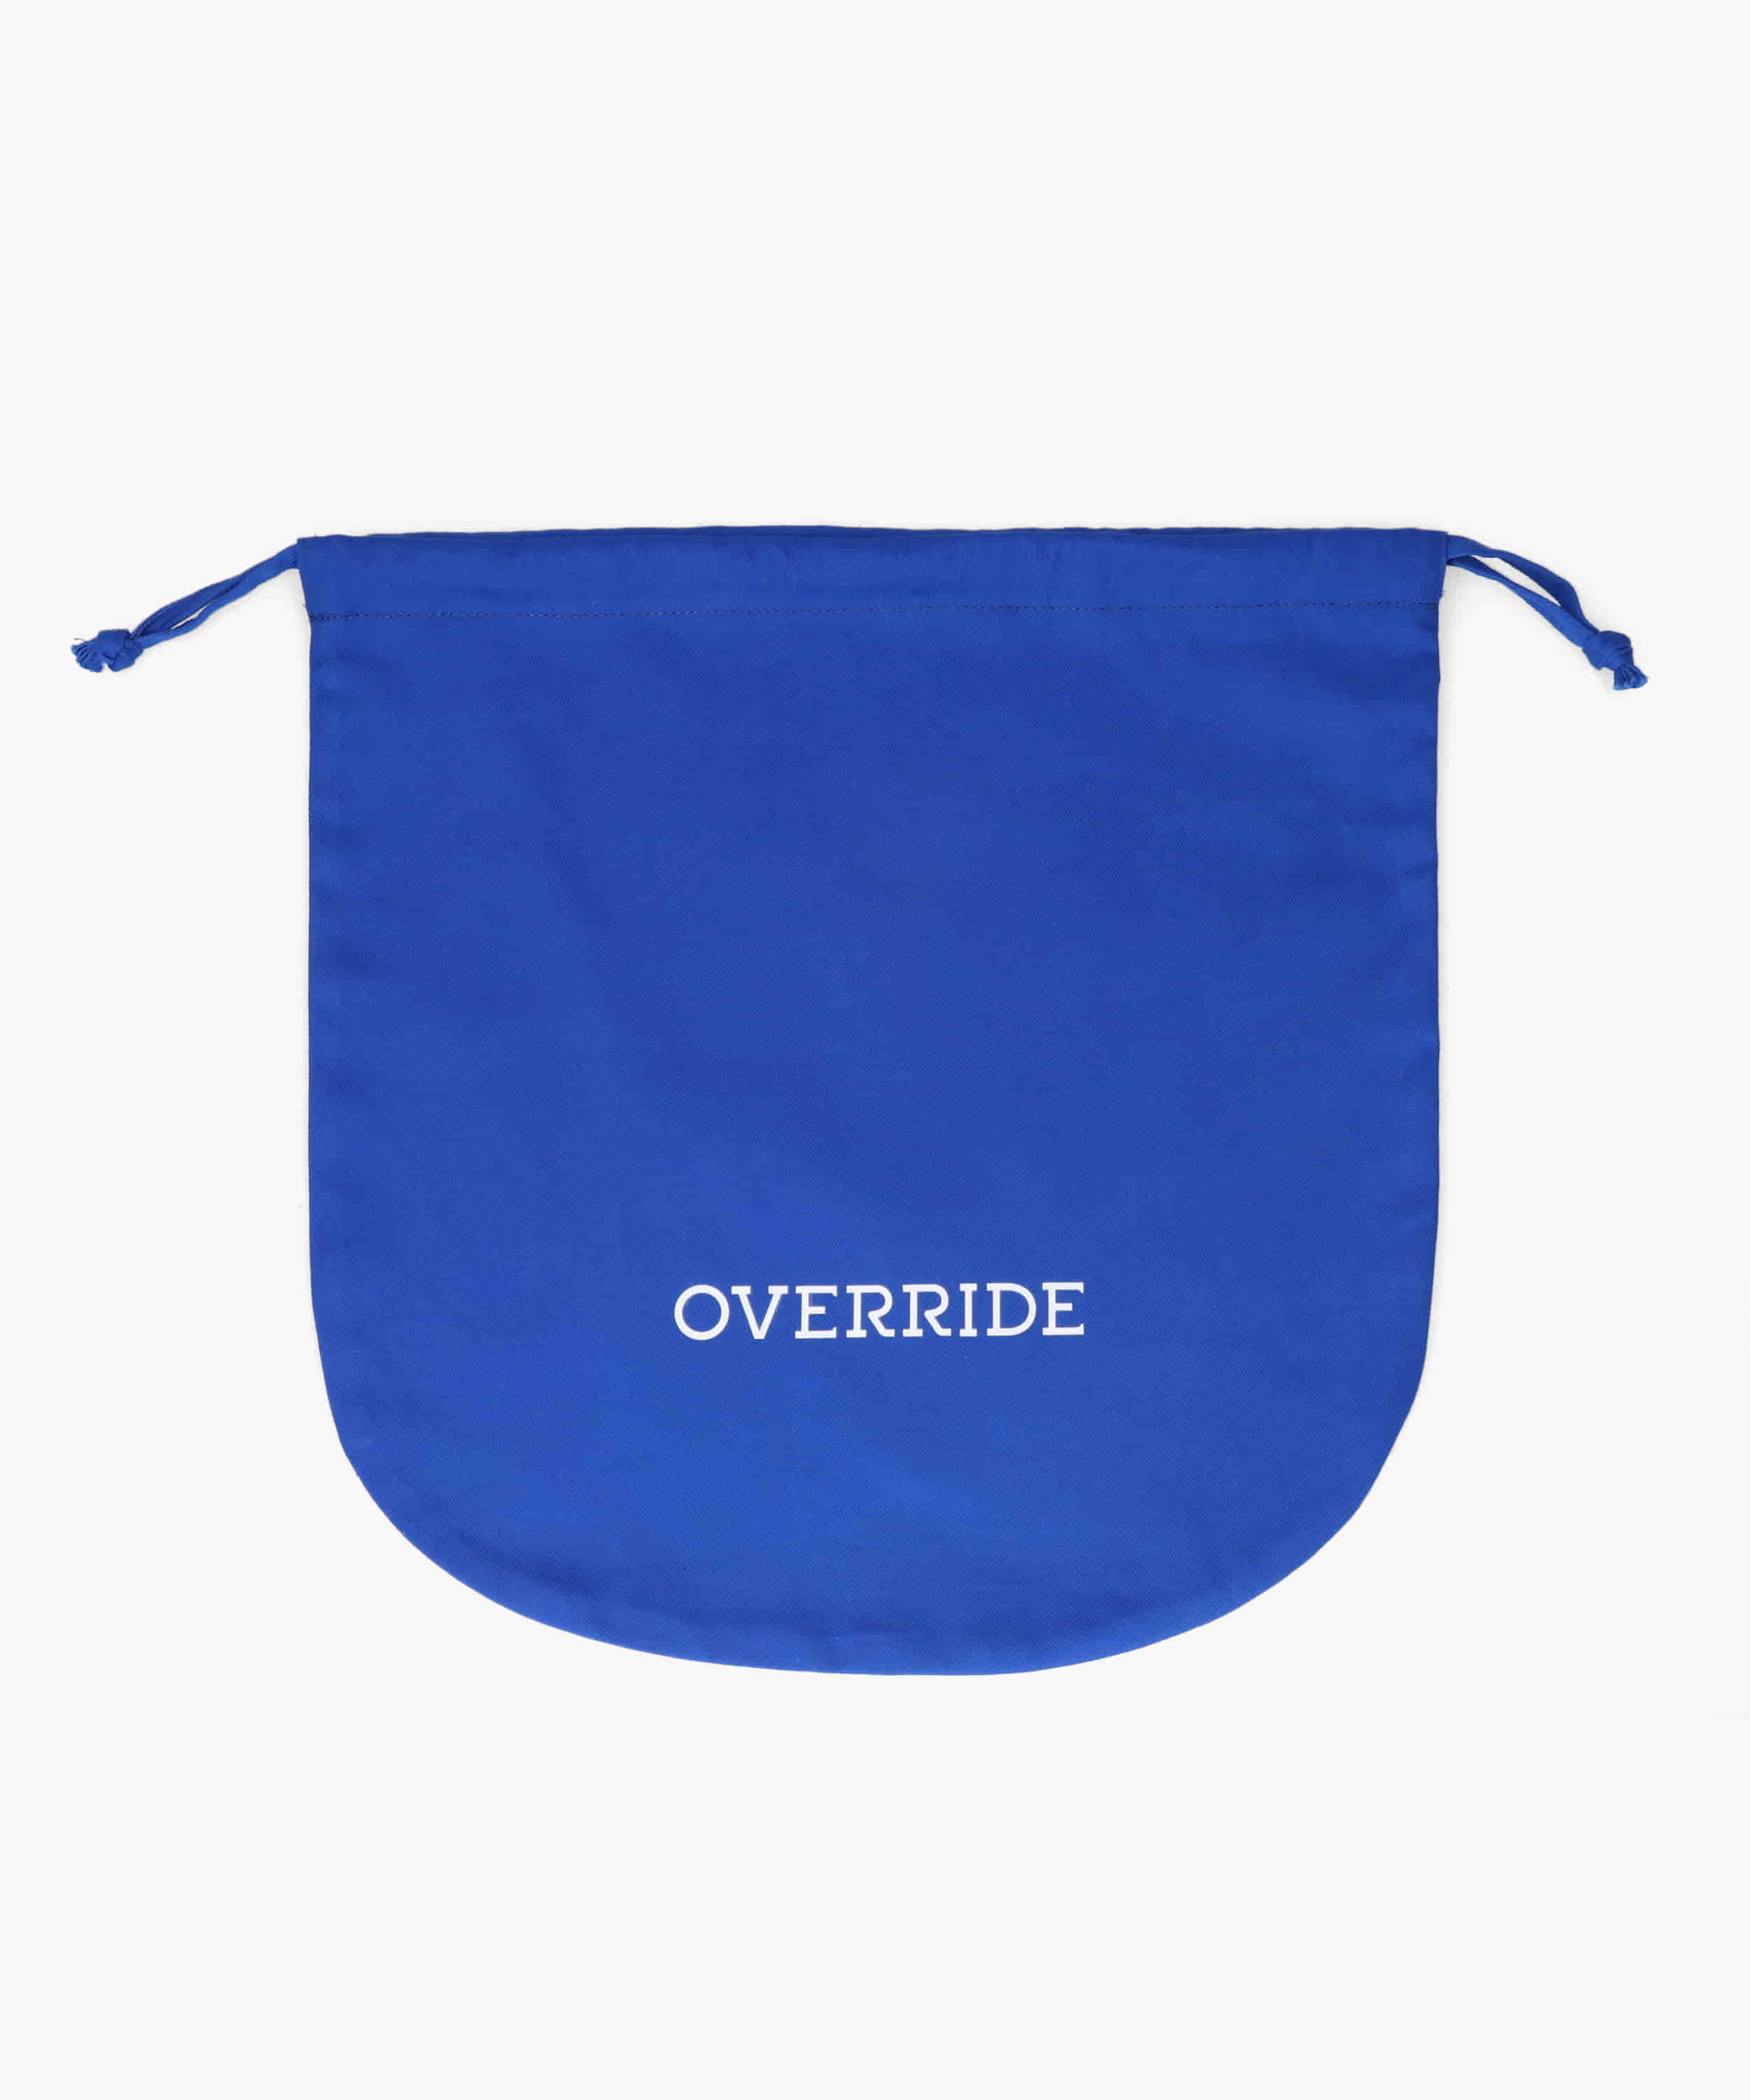 OVERRIDE GIFT BAG Msize